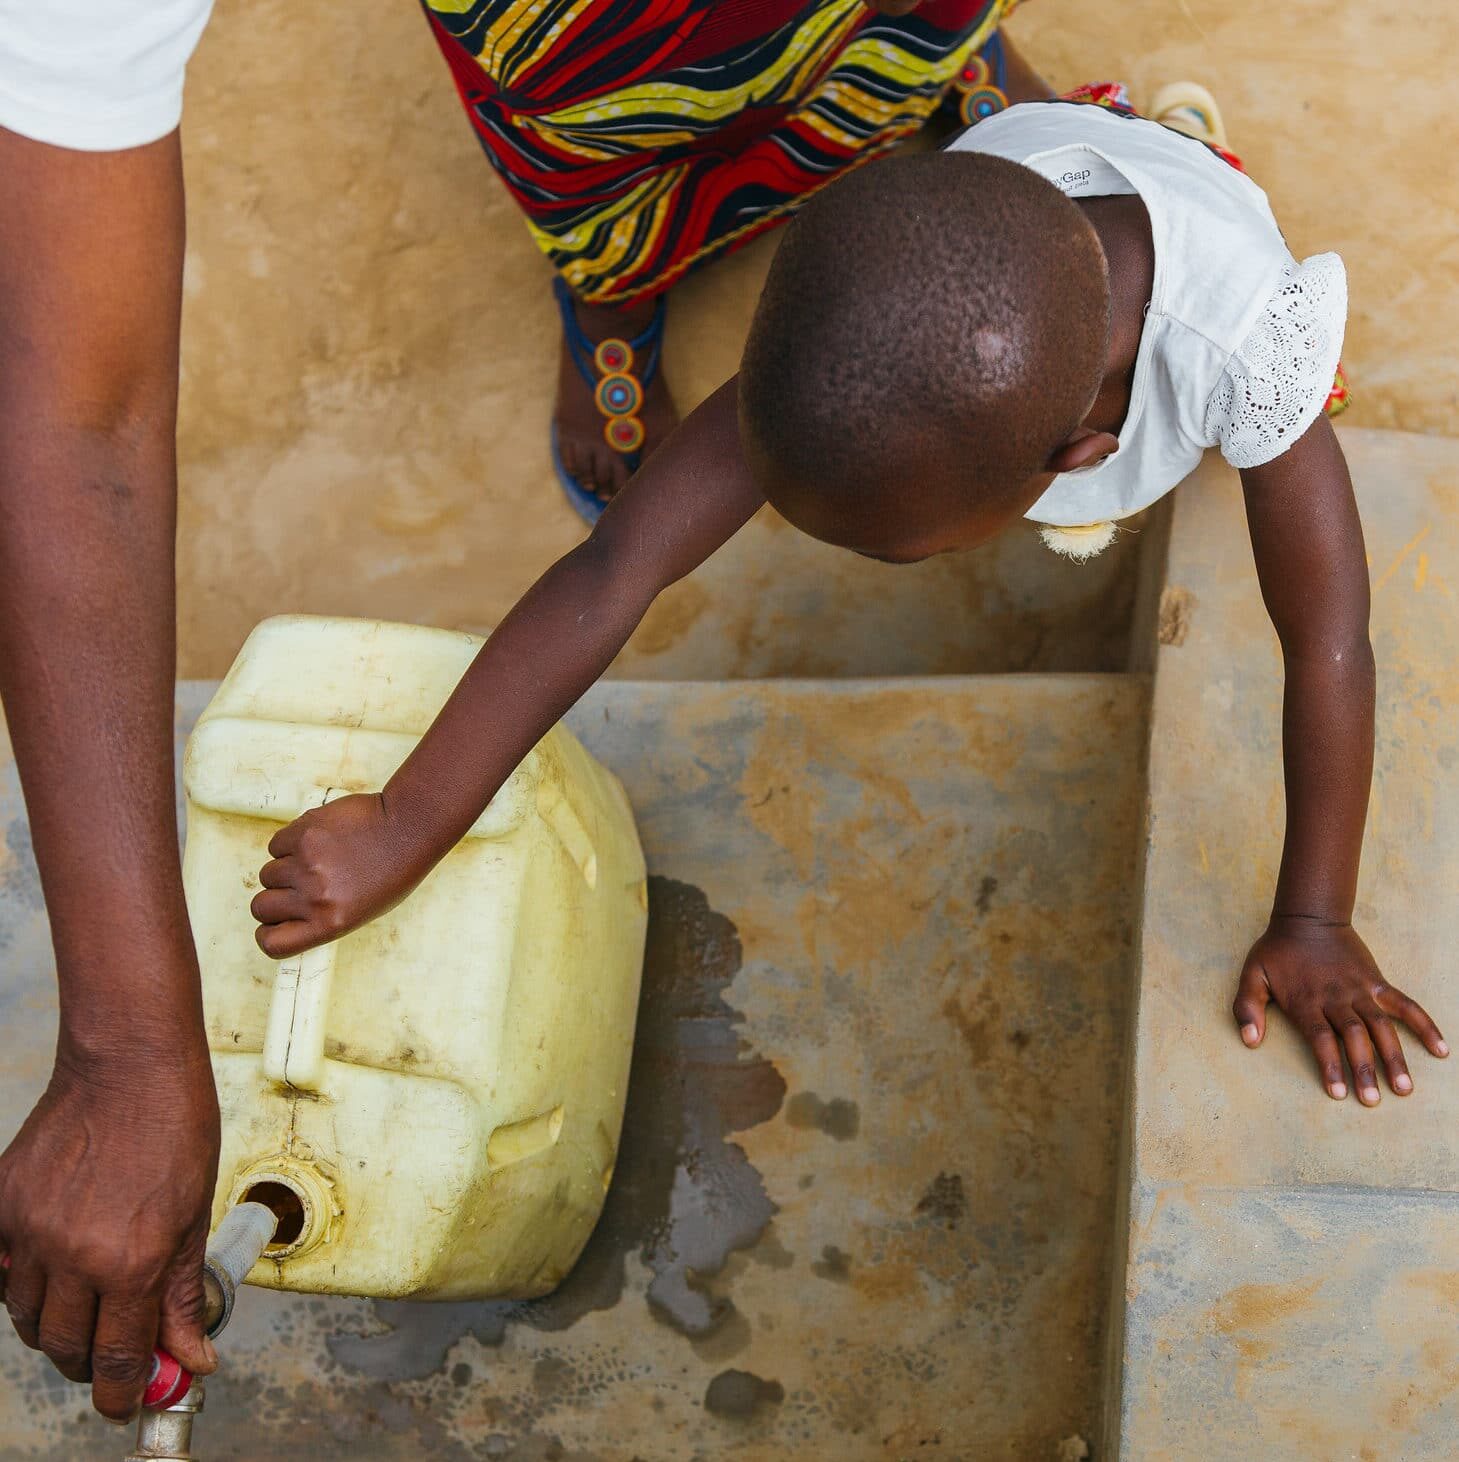 Rwandan people getting fresh water from a community faucet